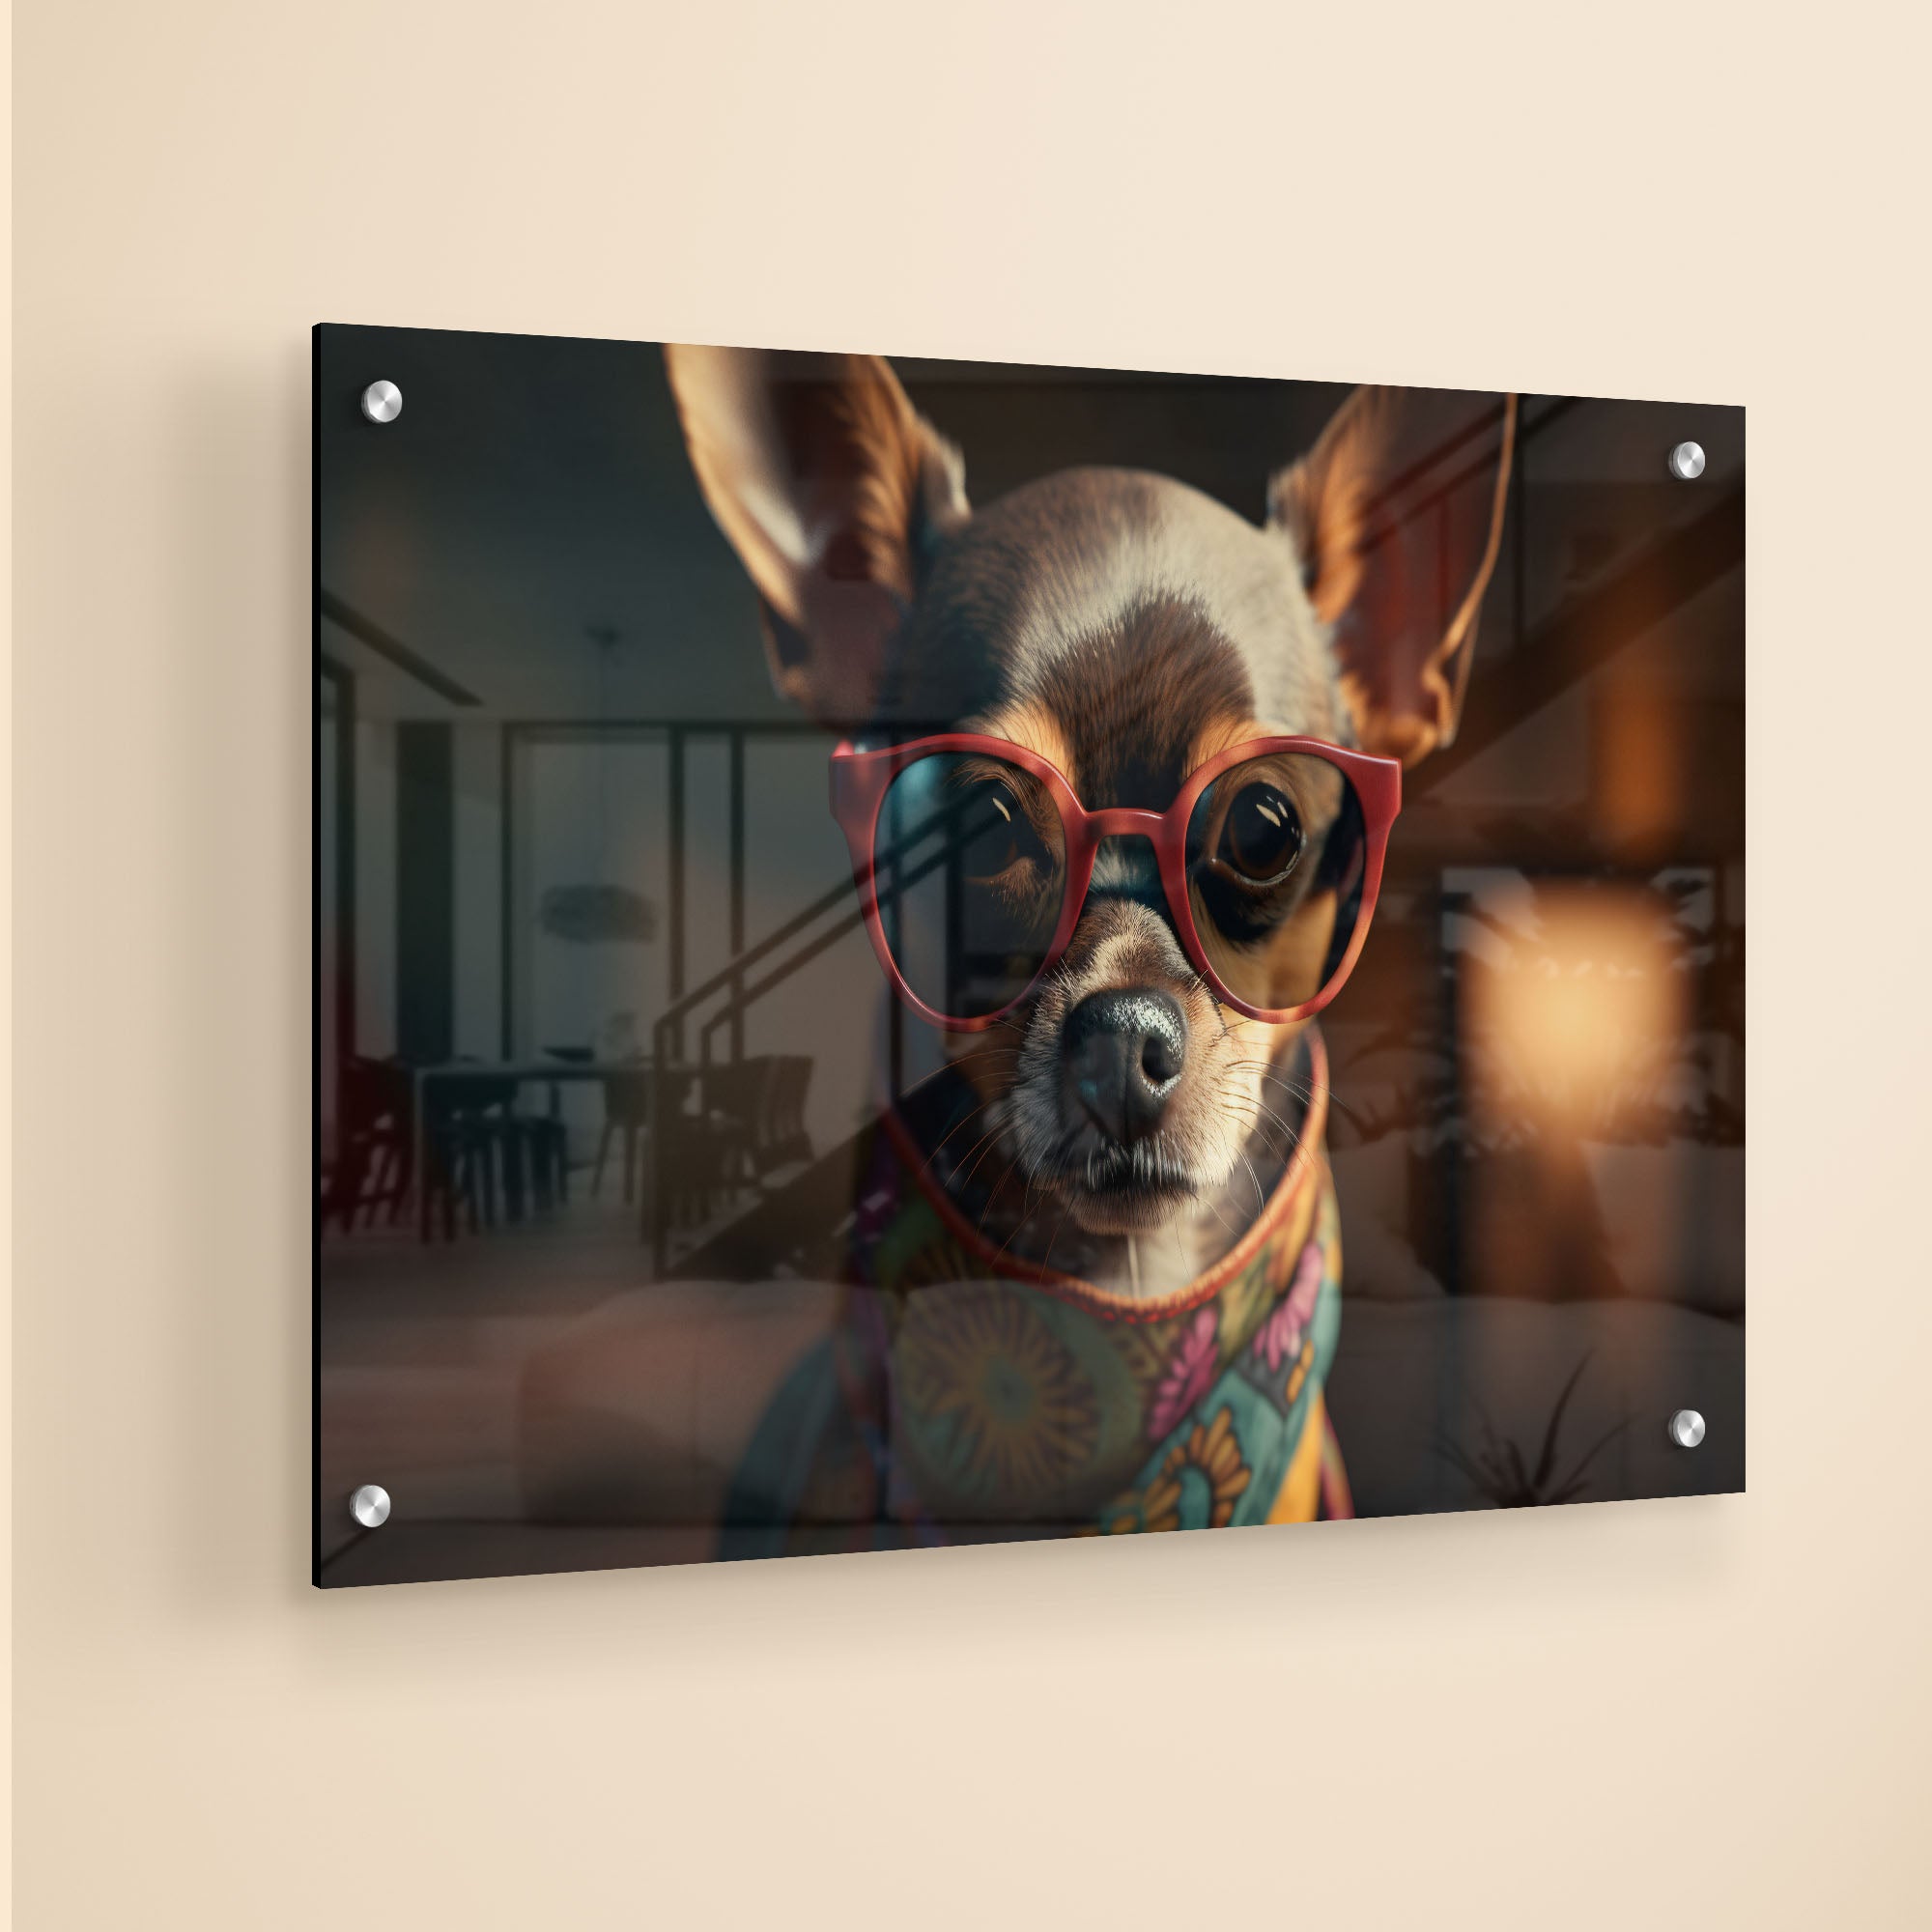 Dog Wearing Glasses Acrylic Wall Painting